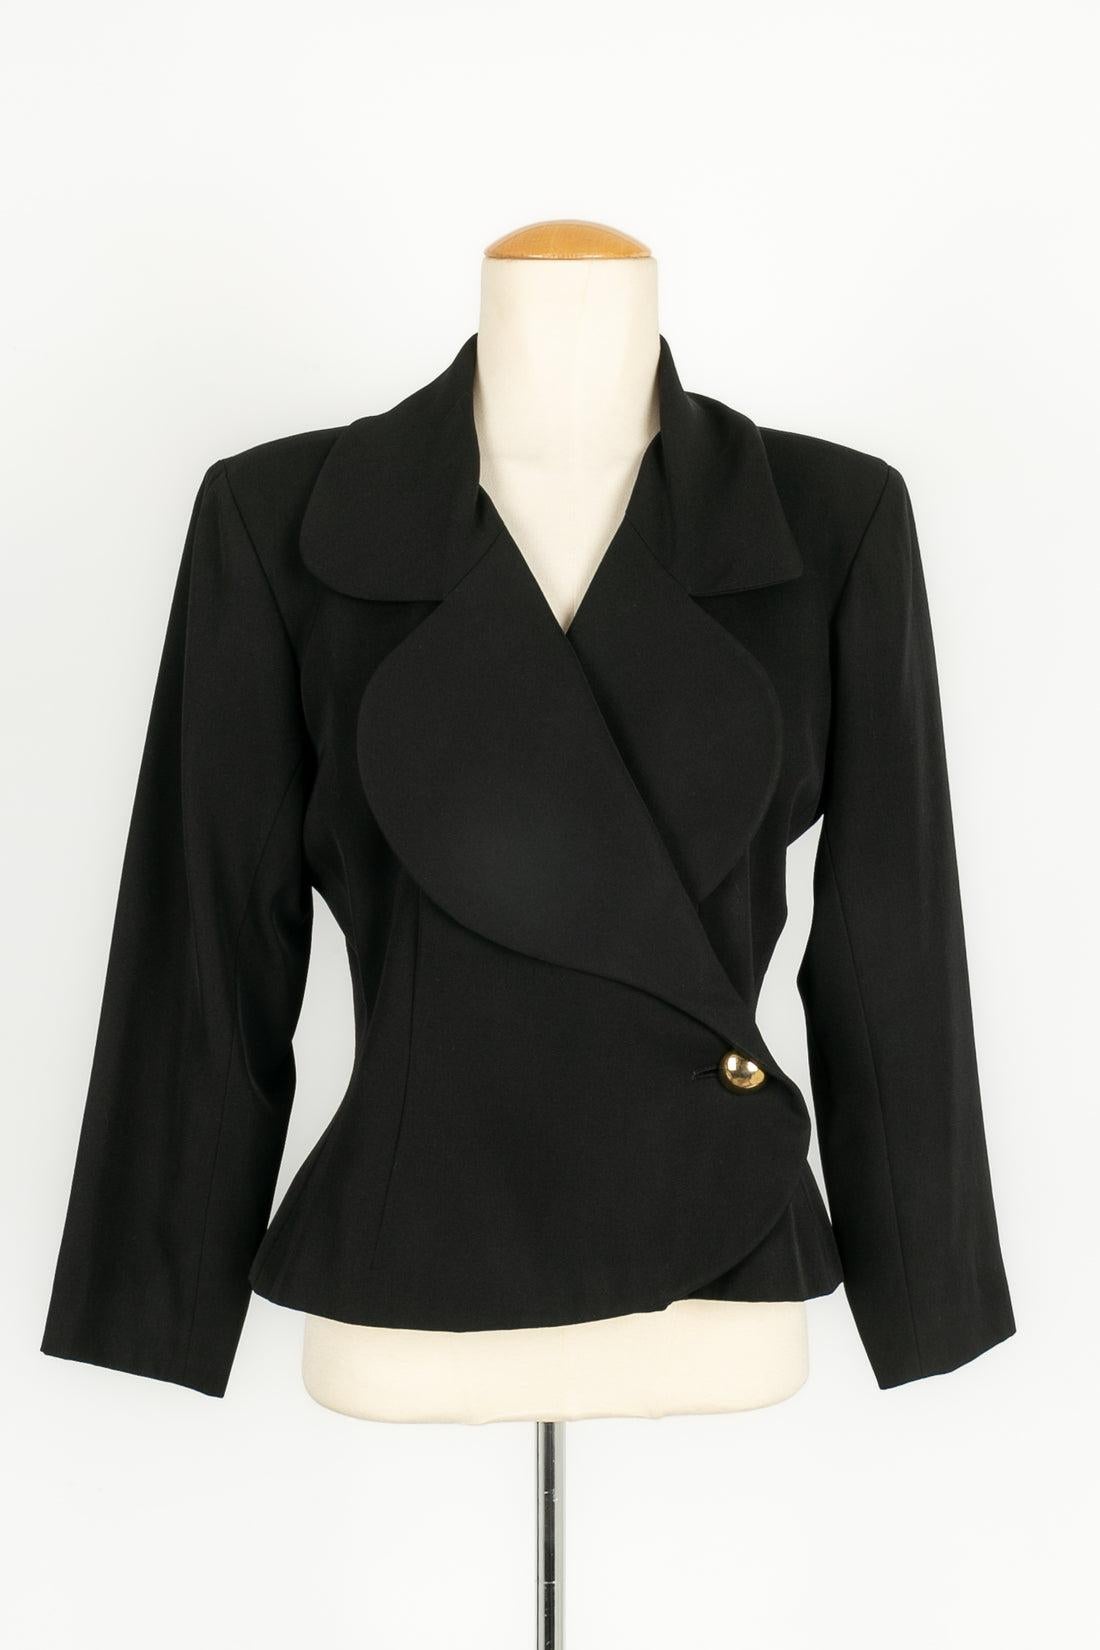 Yves Saint Laurent Black Skirt Suit For Sale 1